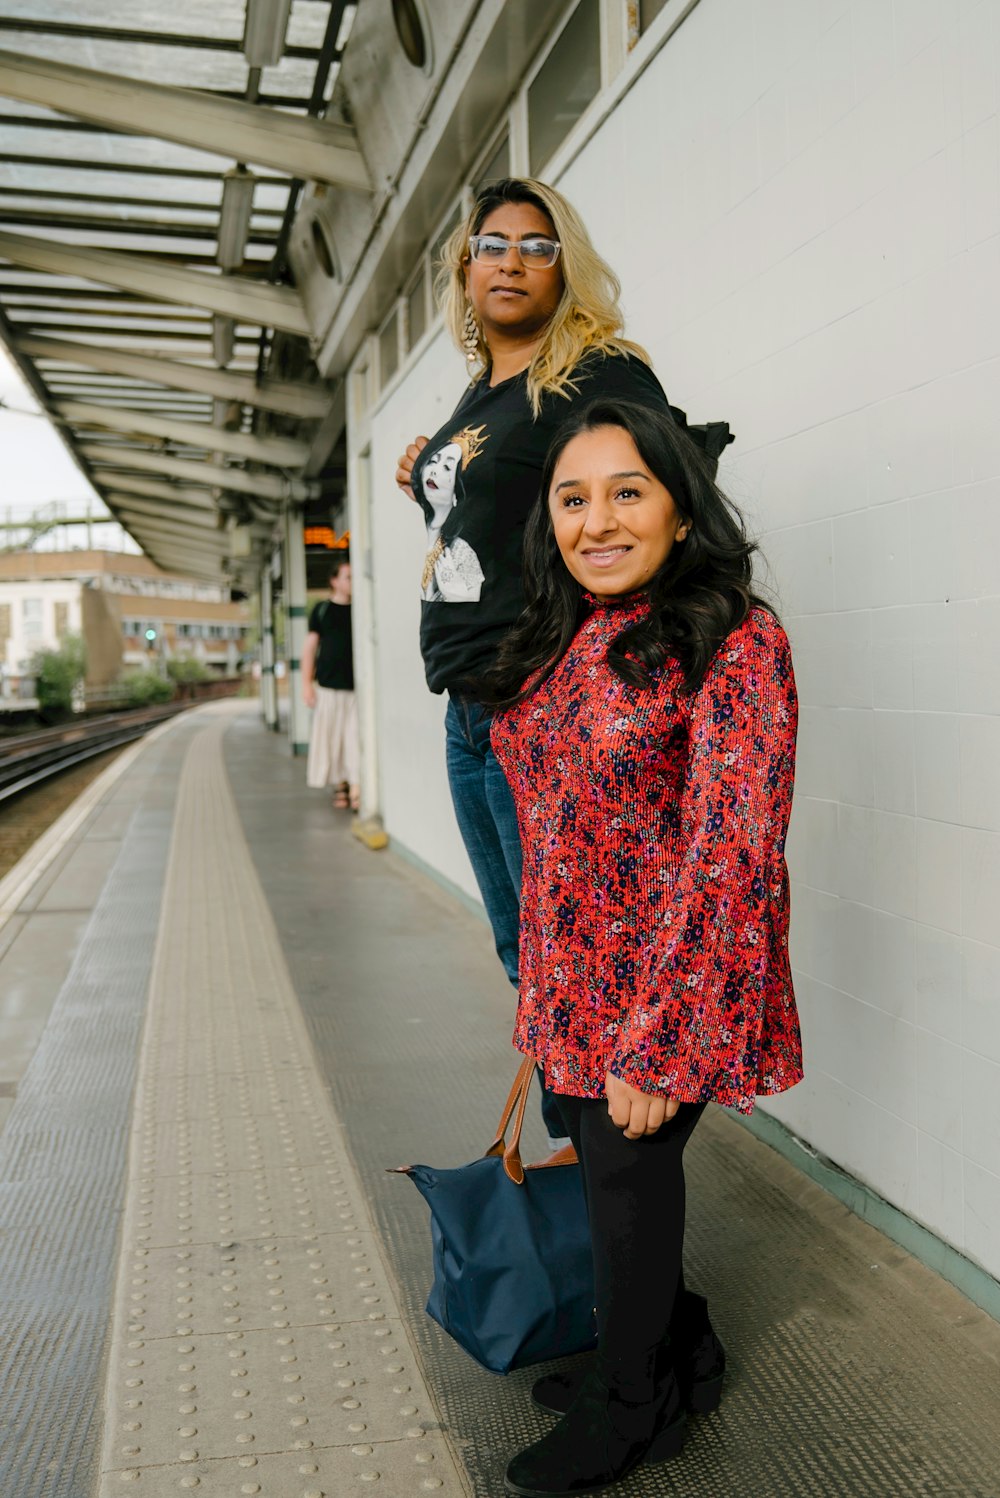 a woman standing next to a man on a train platform